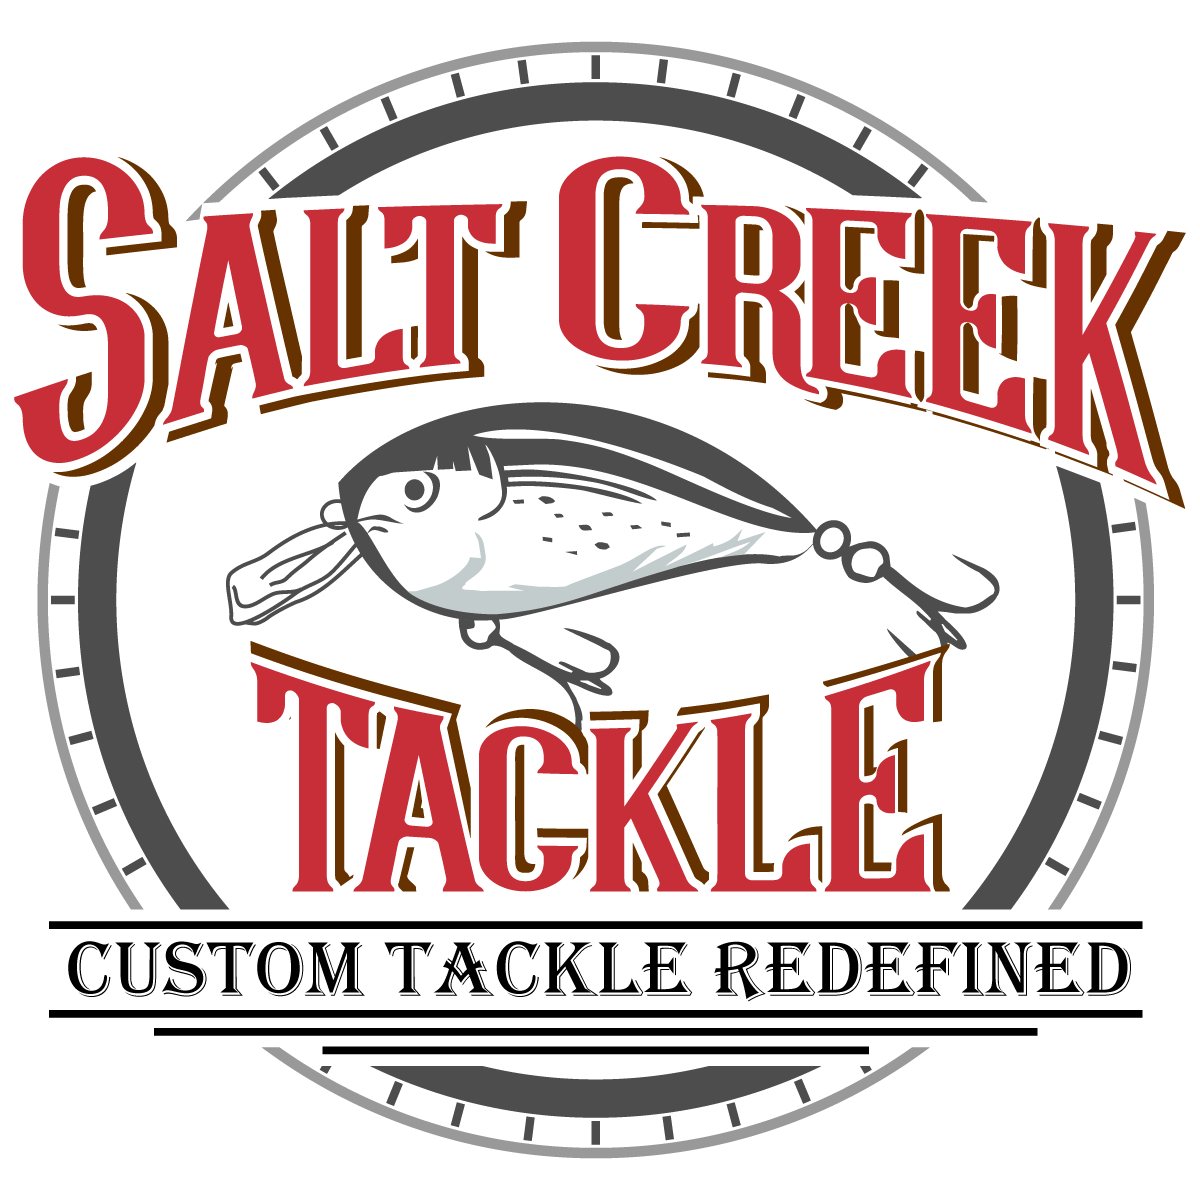 Salt Creek Tackle